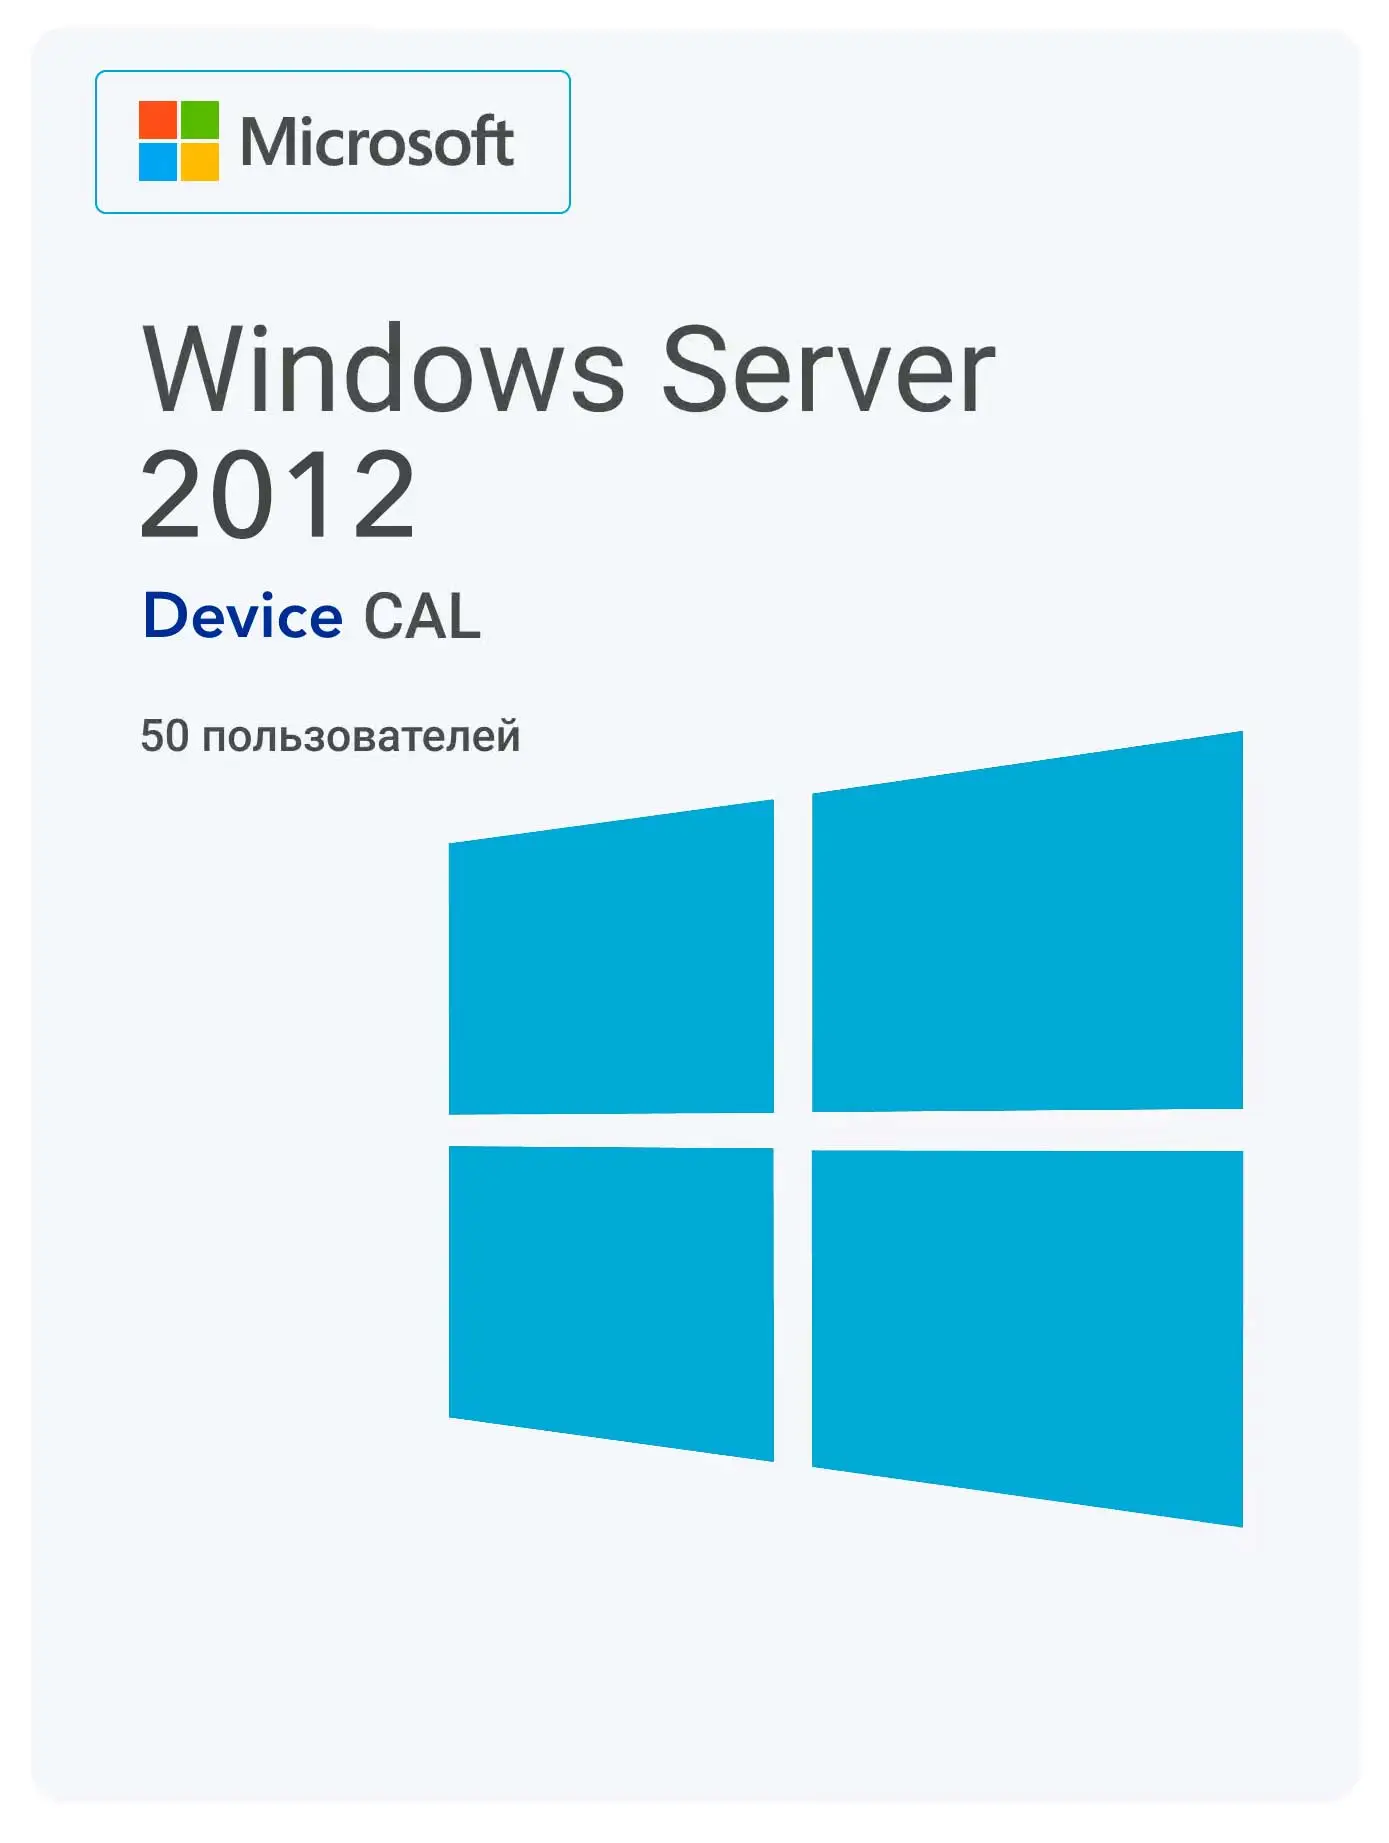 Windows Server 2012 RDS Device CAL (50 User)